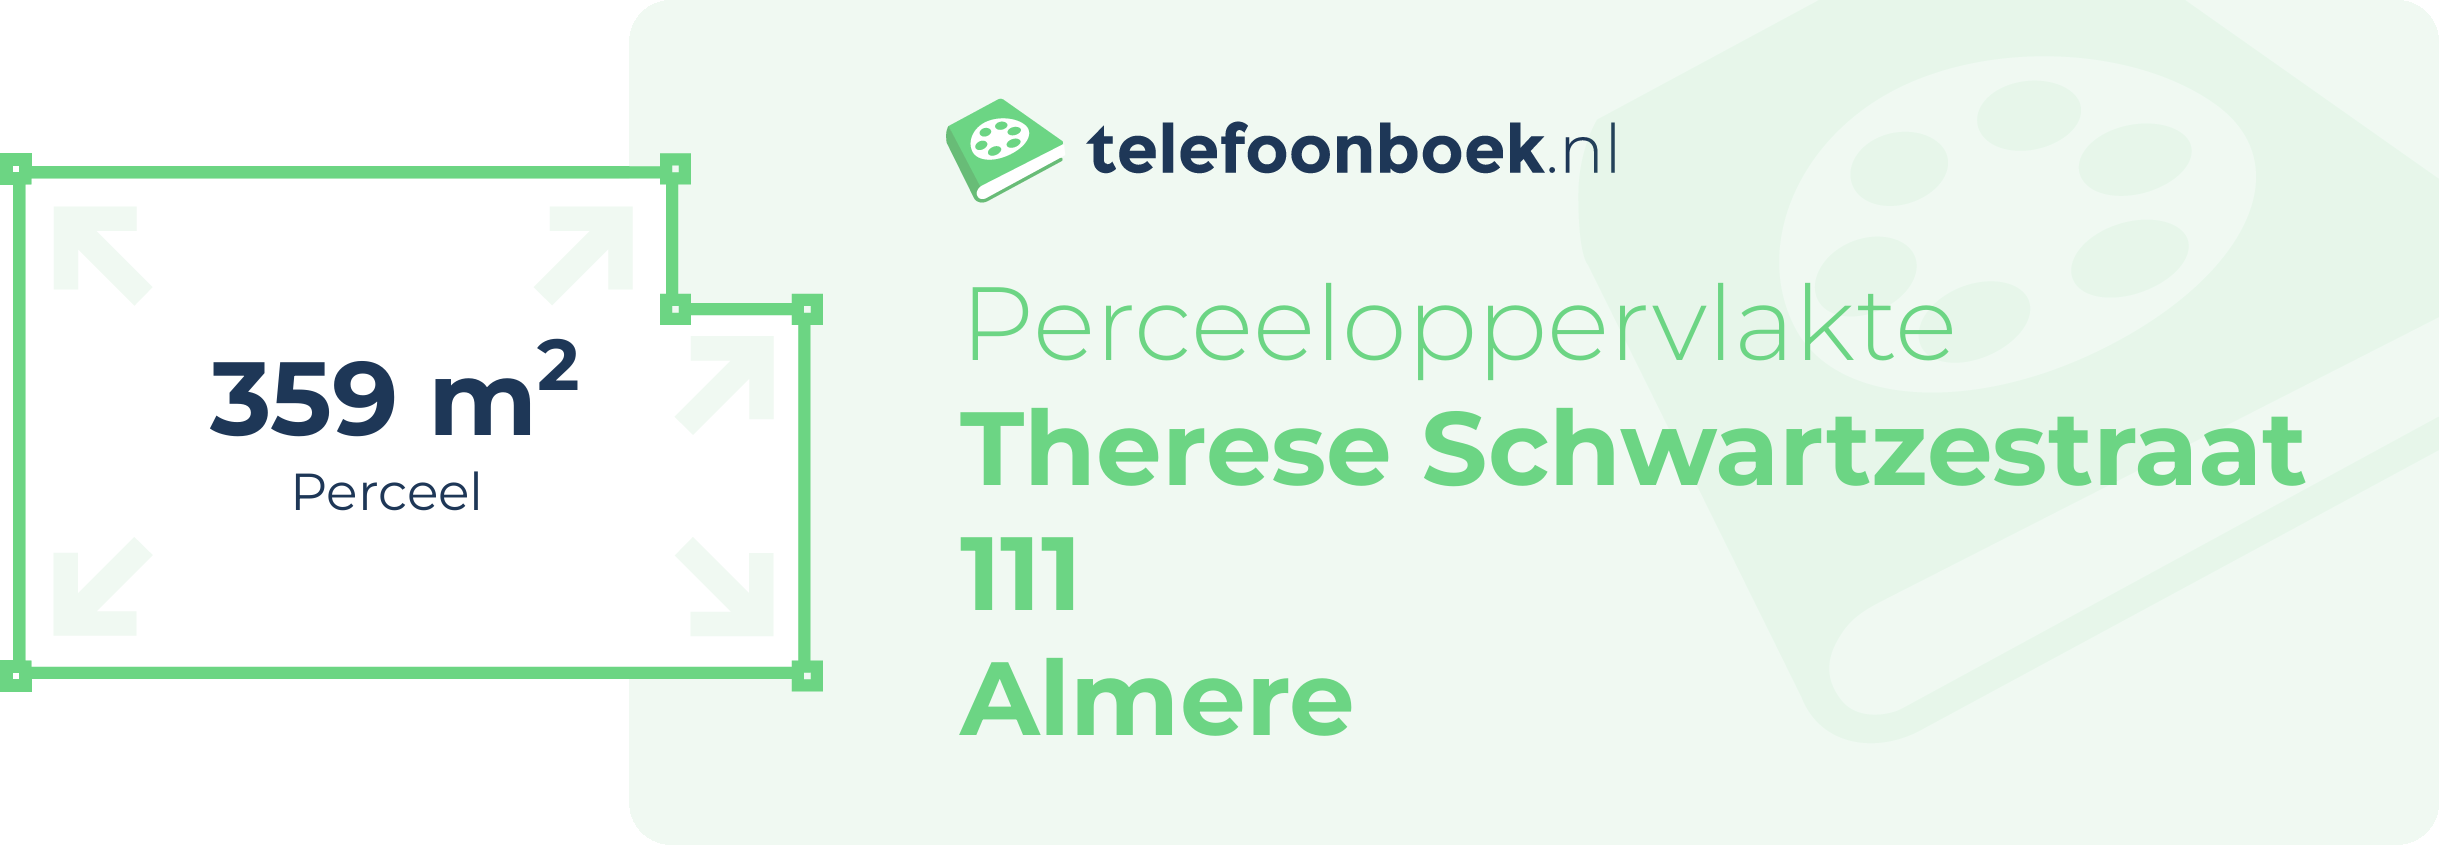 Perceeloppervlakte Therese Schwartzestraat 111 Almere